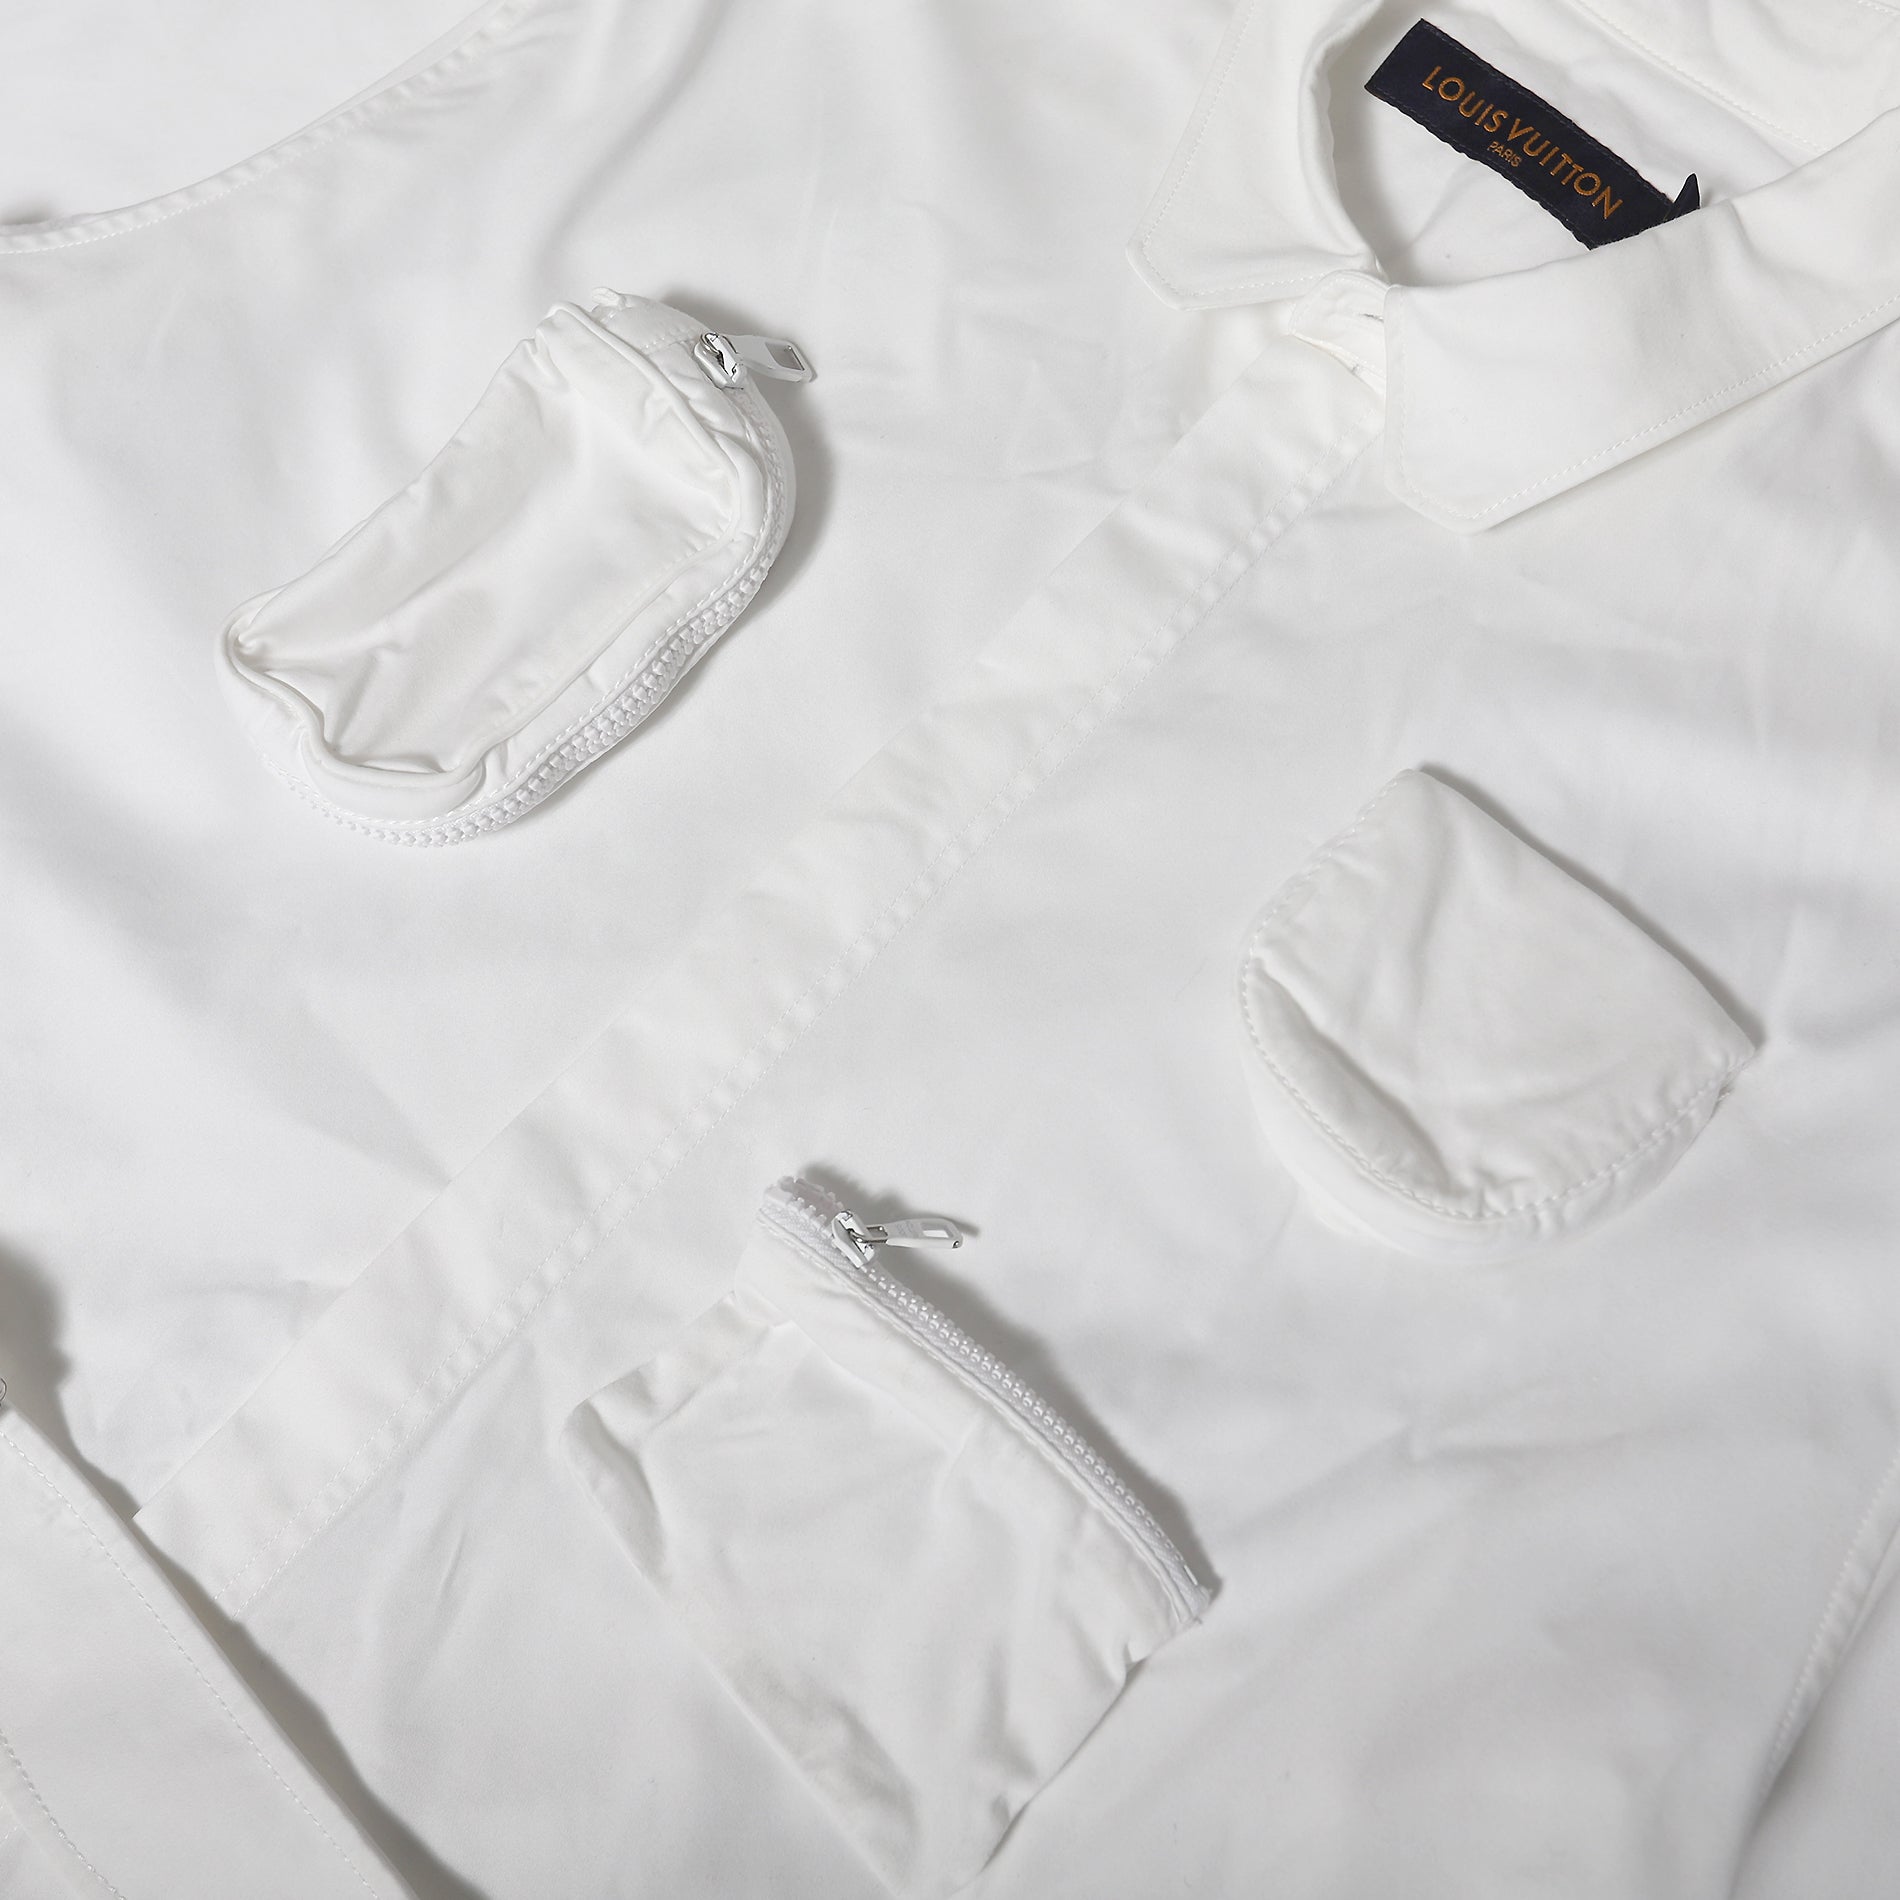 white louis vuitton button up shirt